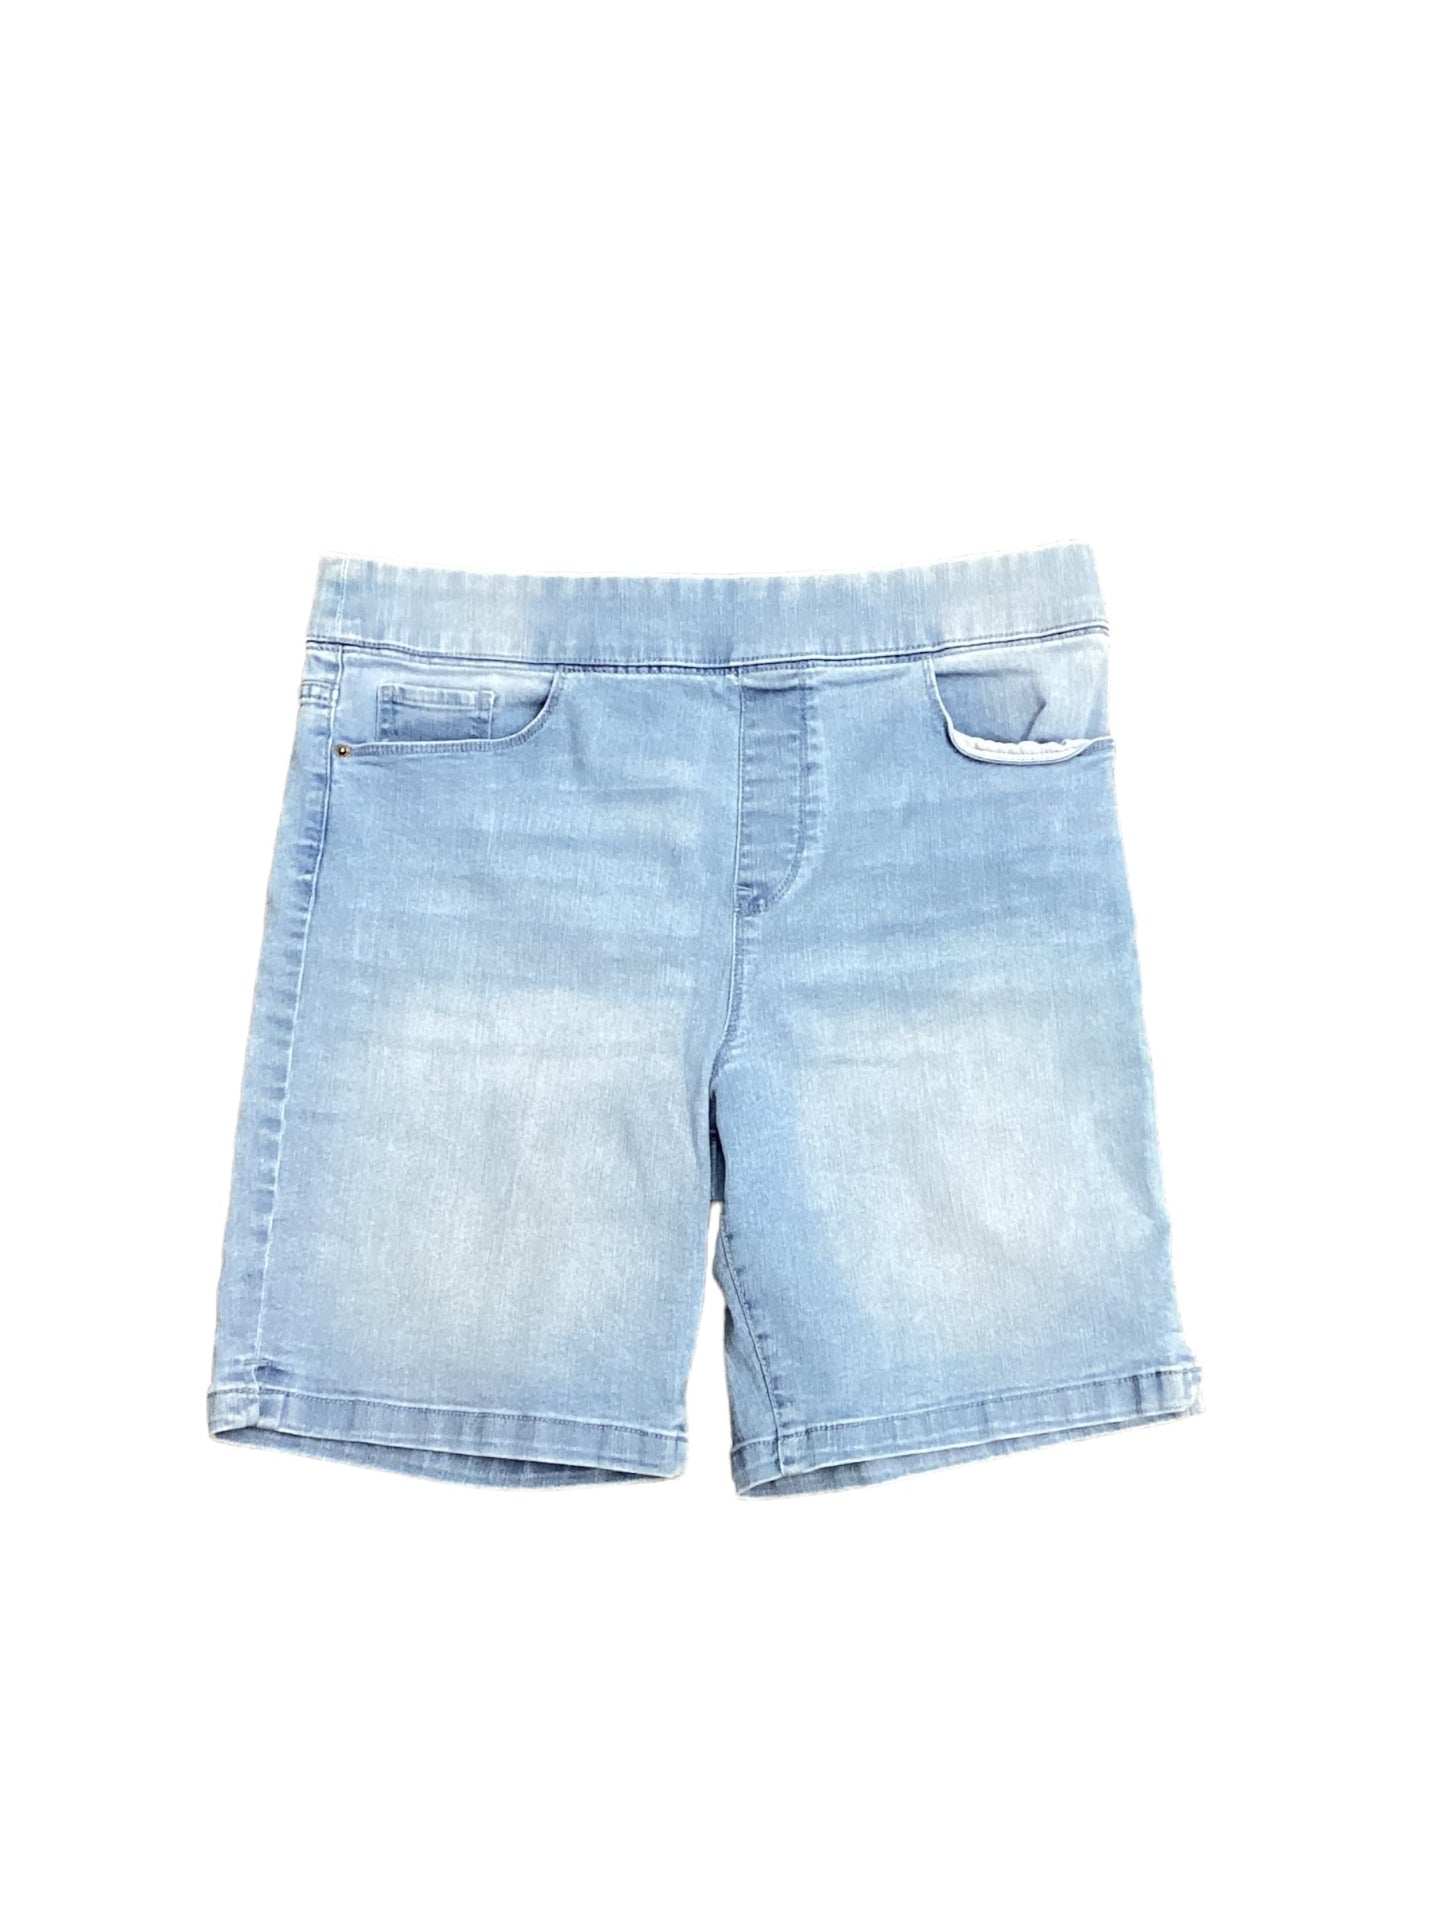 Blue Denim Shorts Dkny, Size L